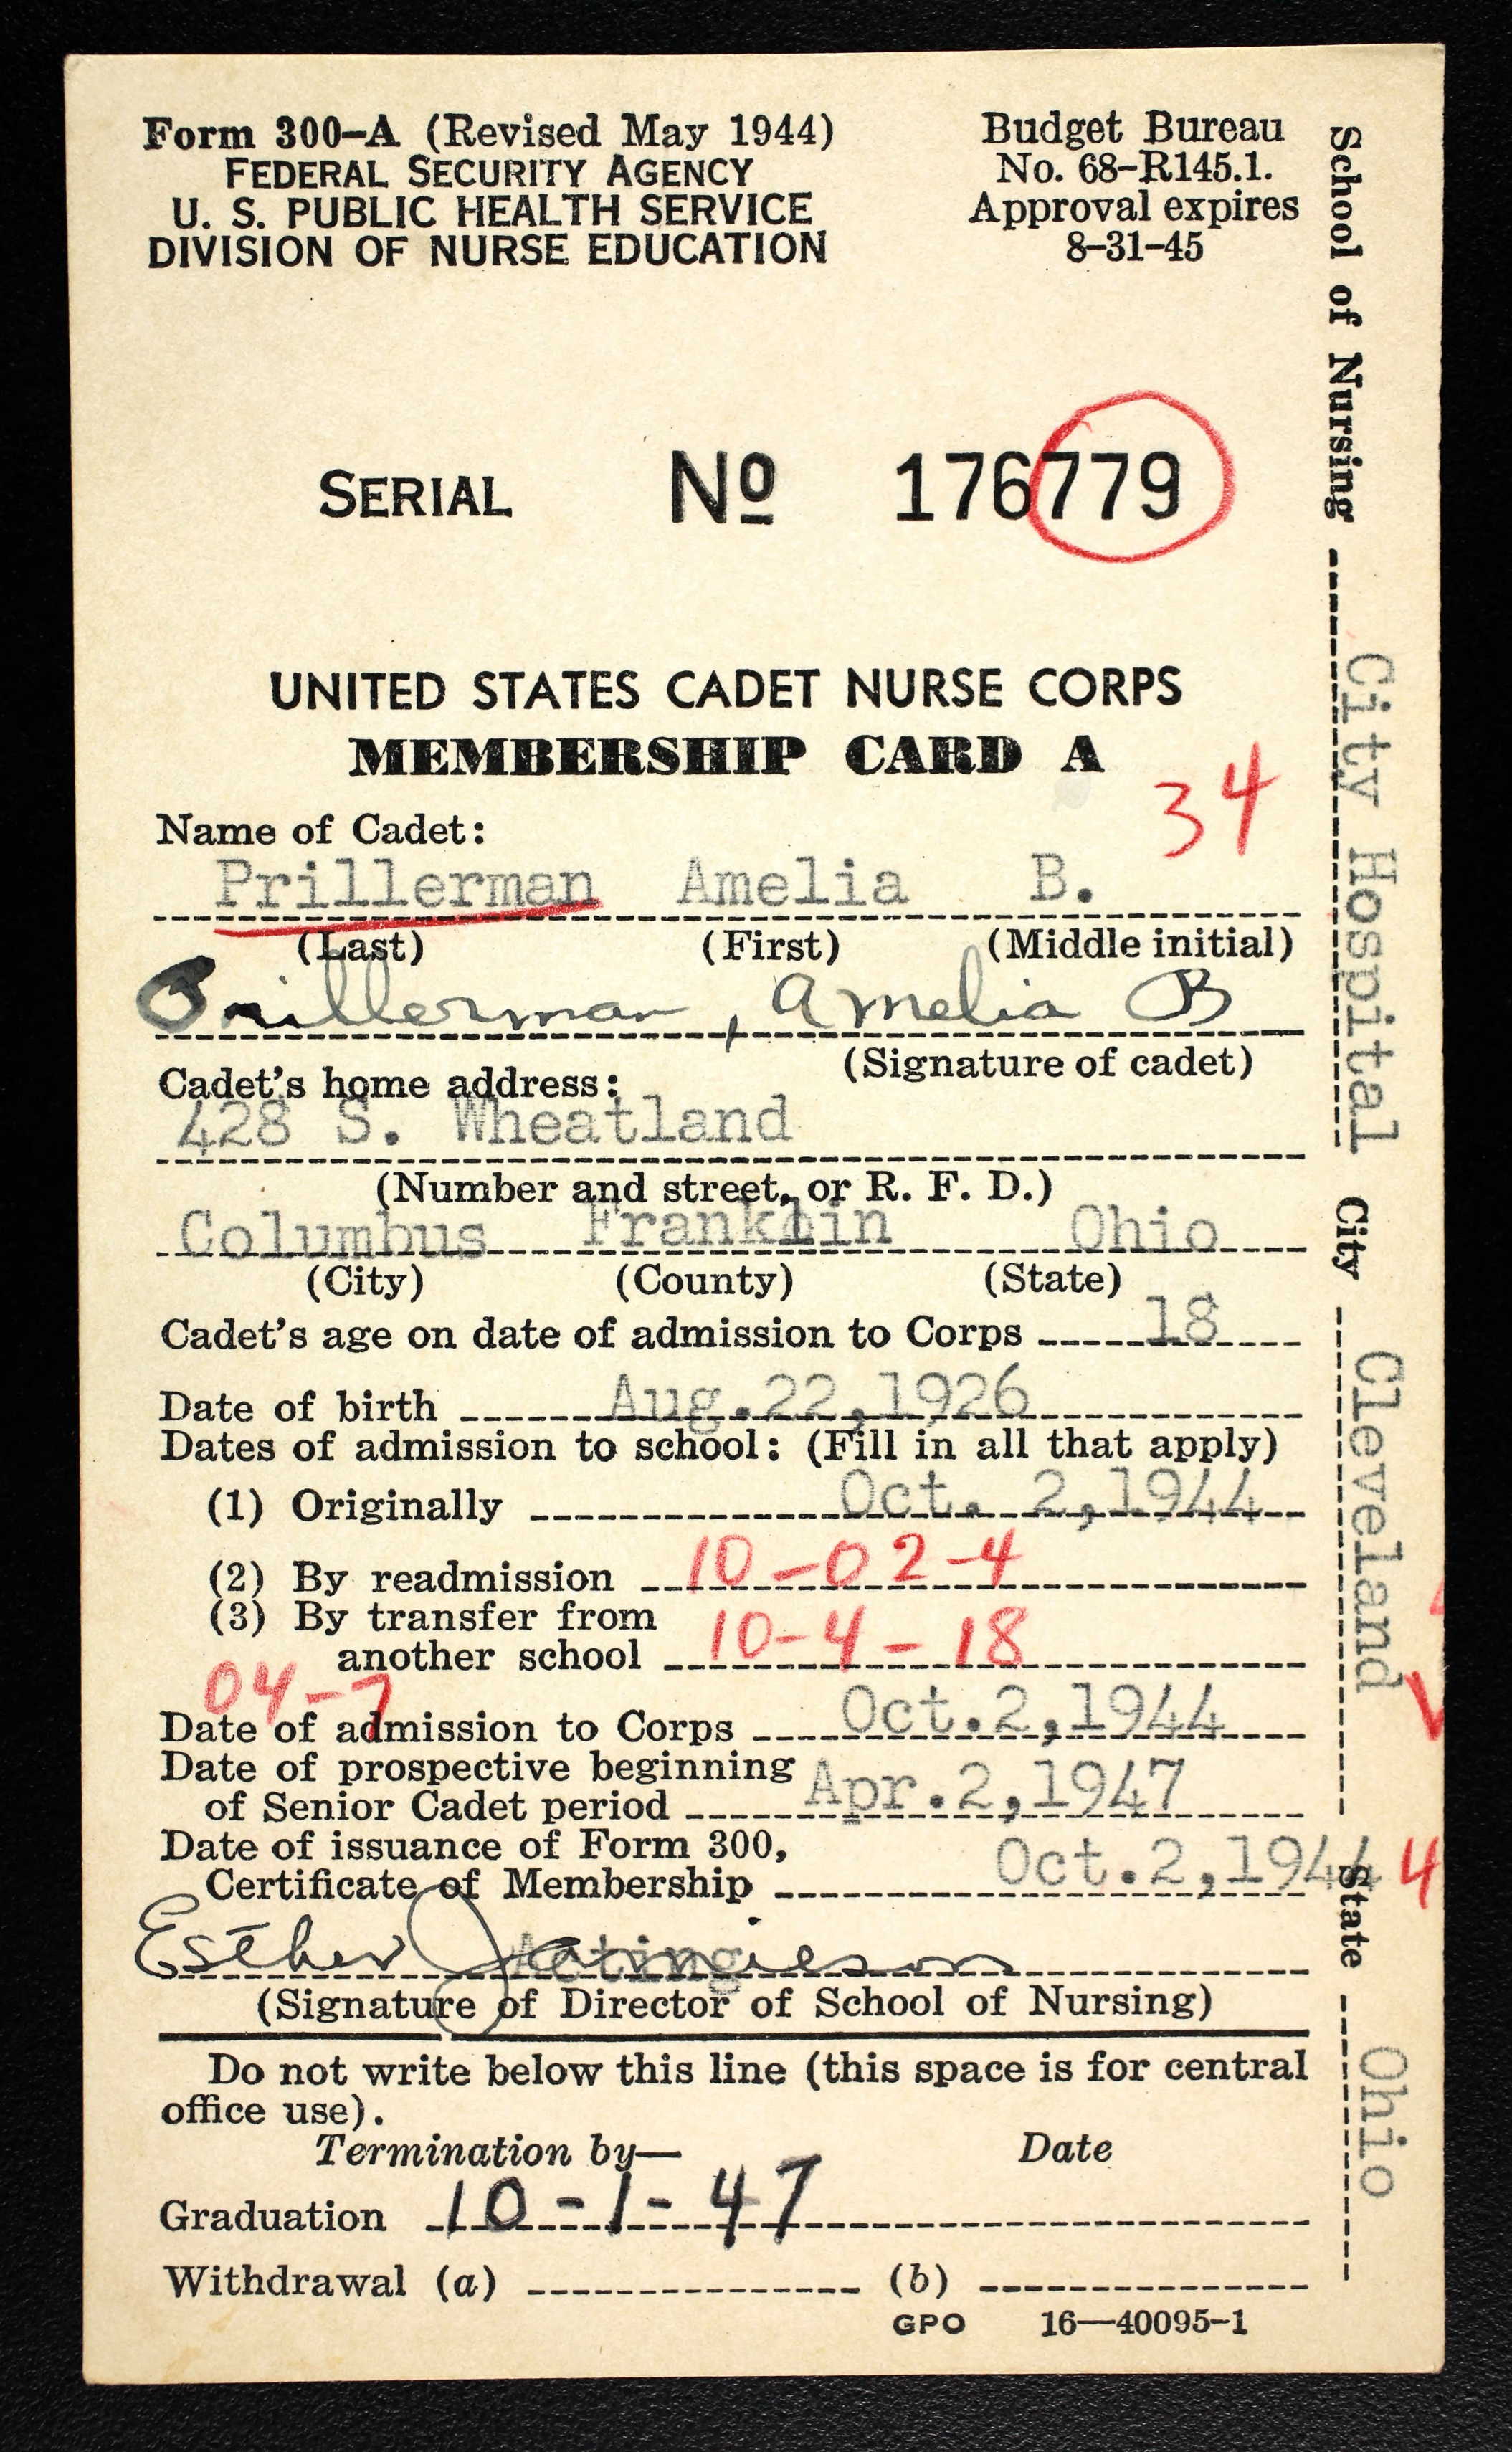 Amelia's membership card